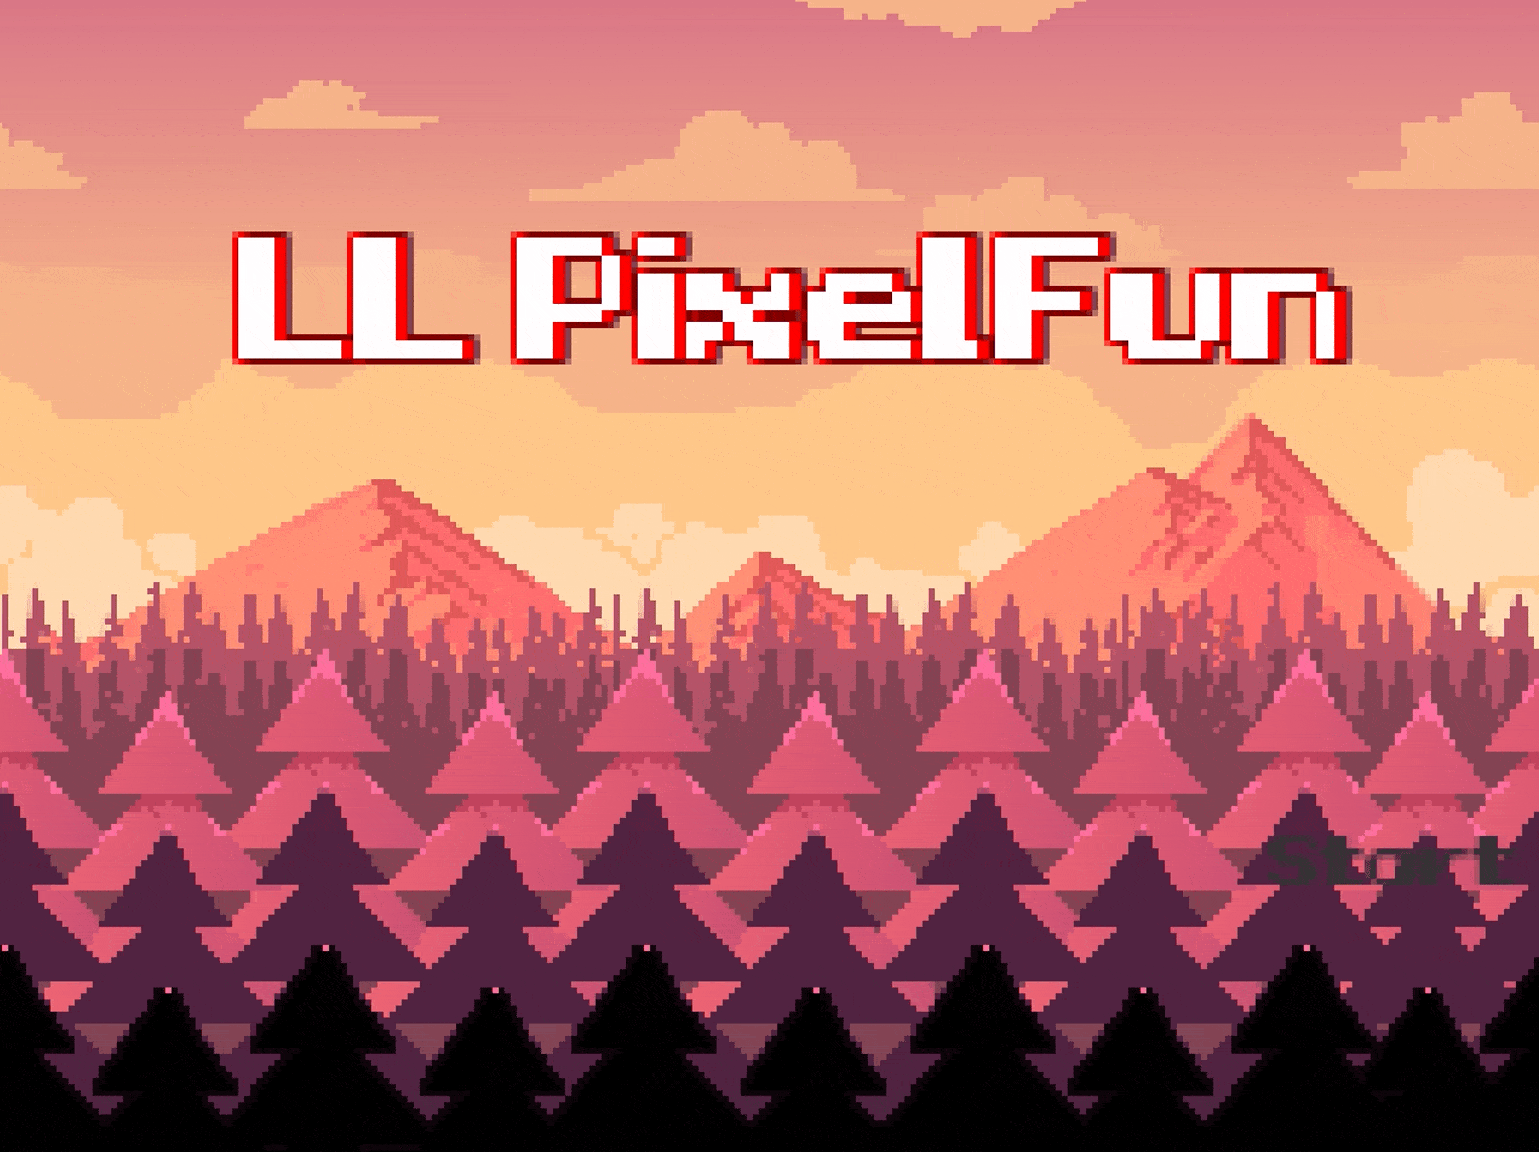 LL PixelFun！一款免费可商用的西文电子风像素字体